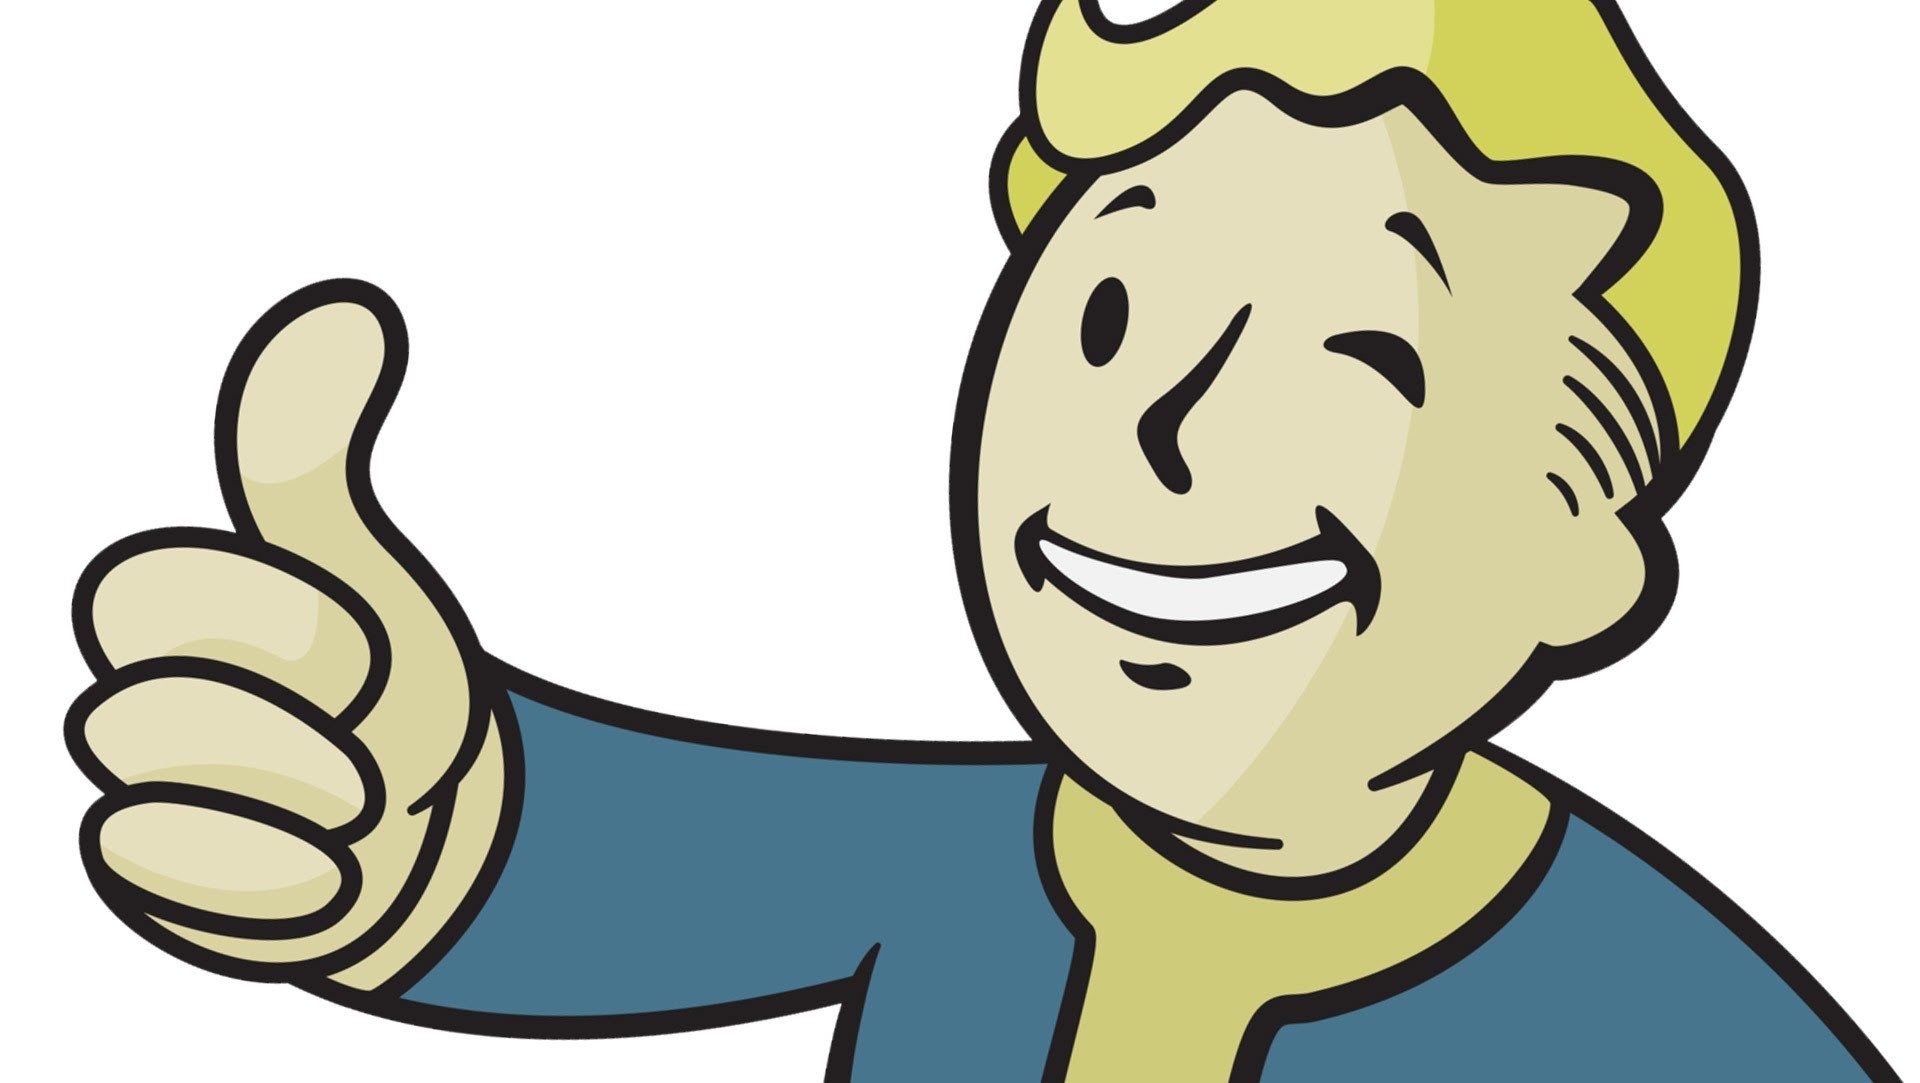 Fallout Vault Boy wallpaper ·① Download free amazing High